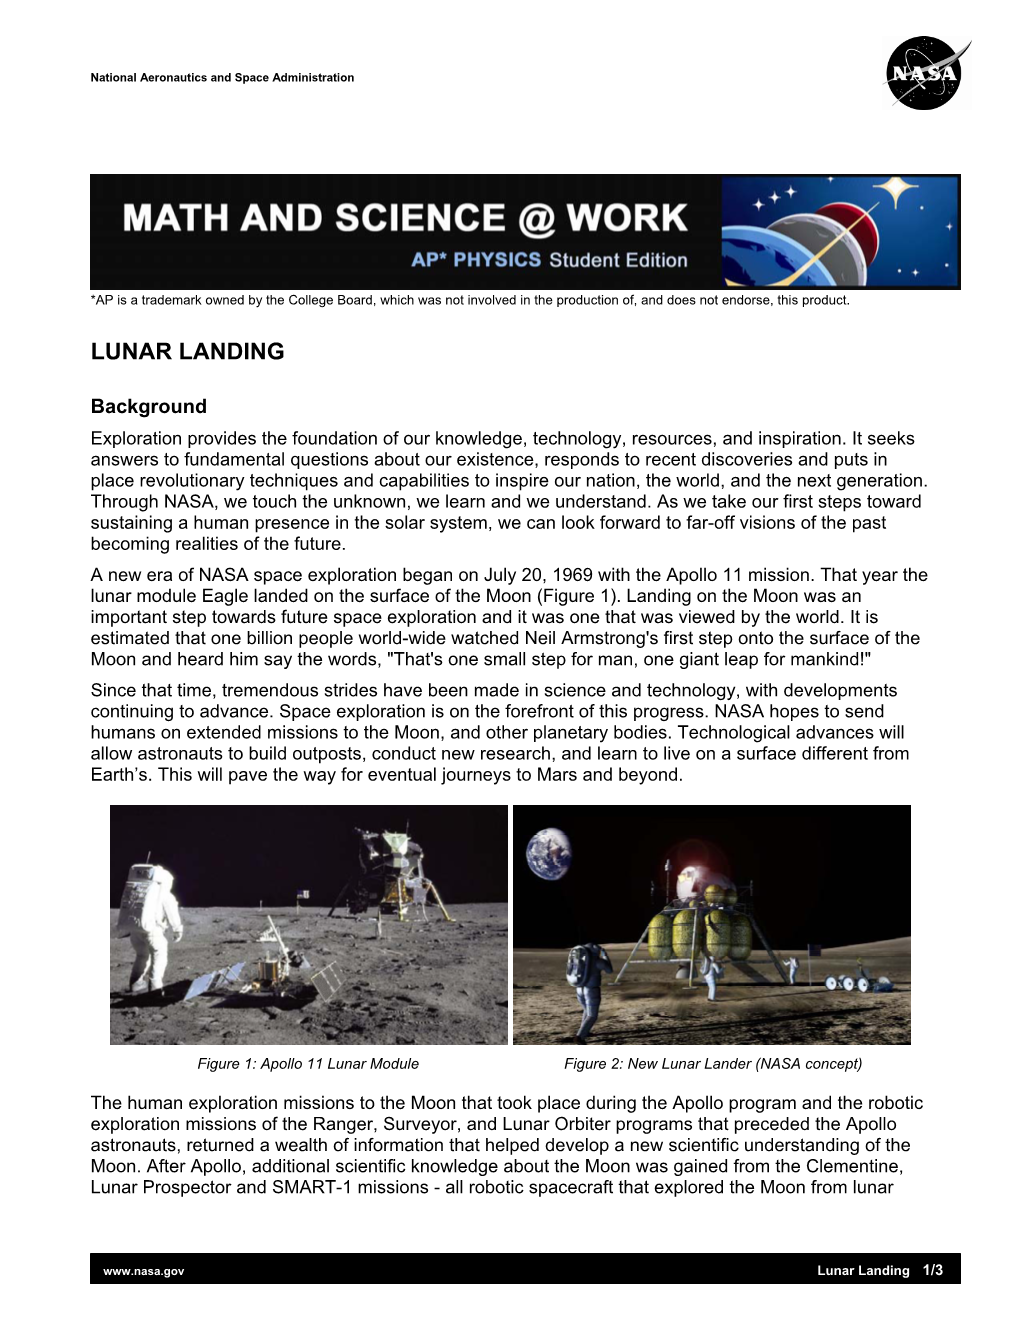 Lunar Landing Student Edition